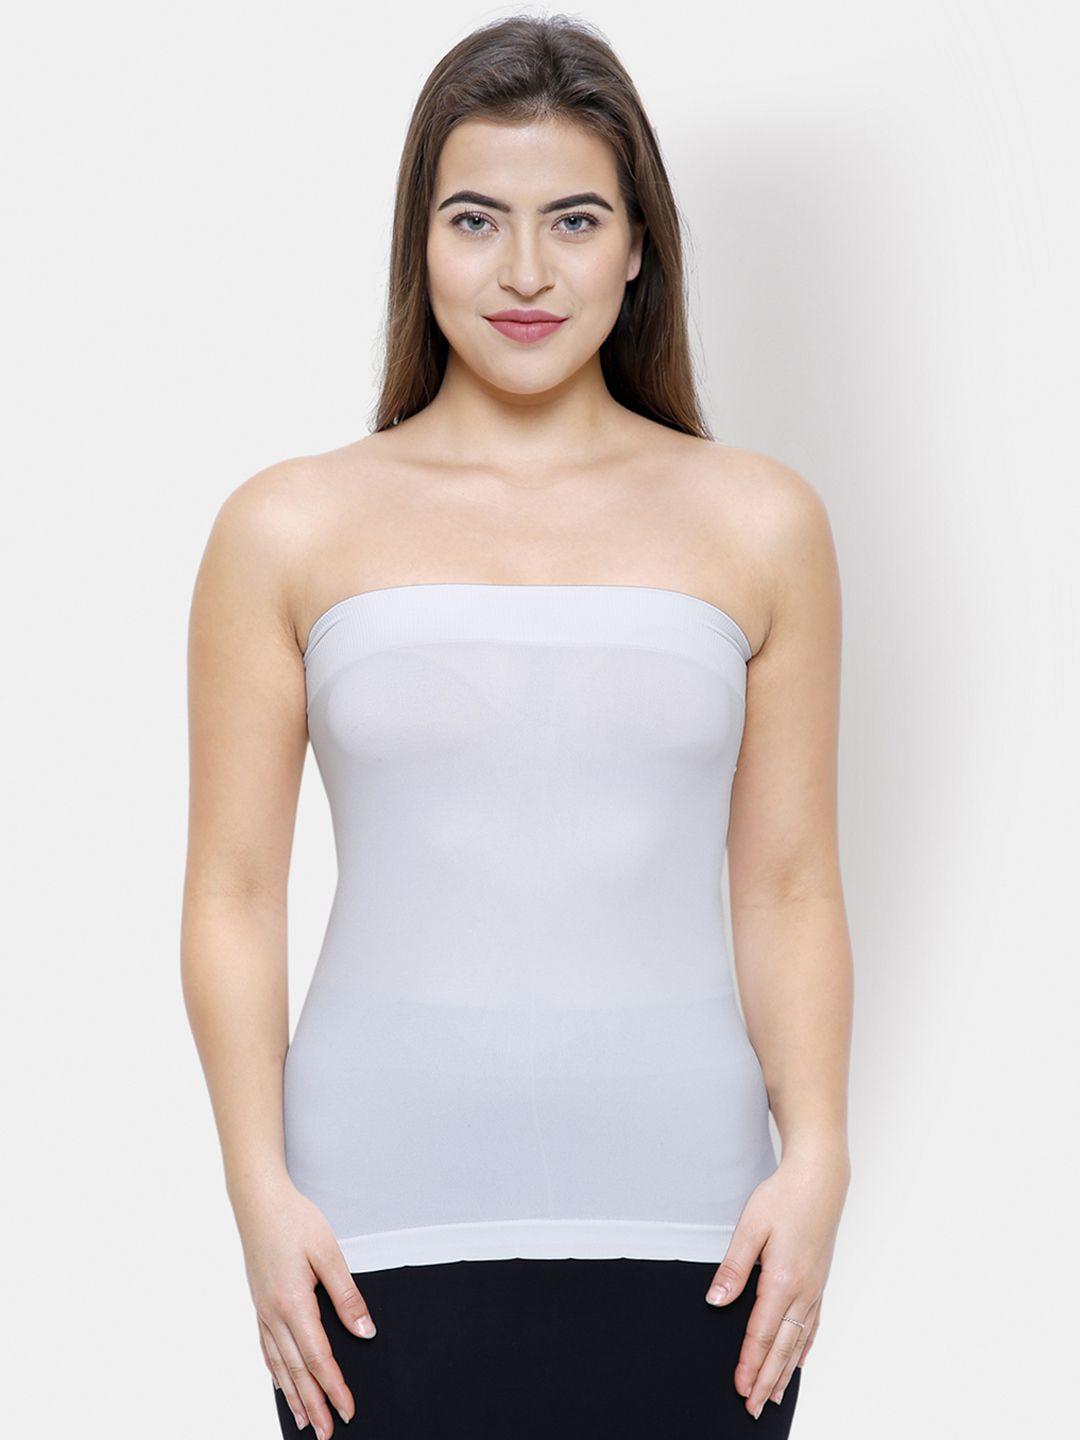 fashionrack-women-white-solid-strapless-camisole-8214